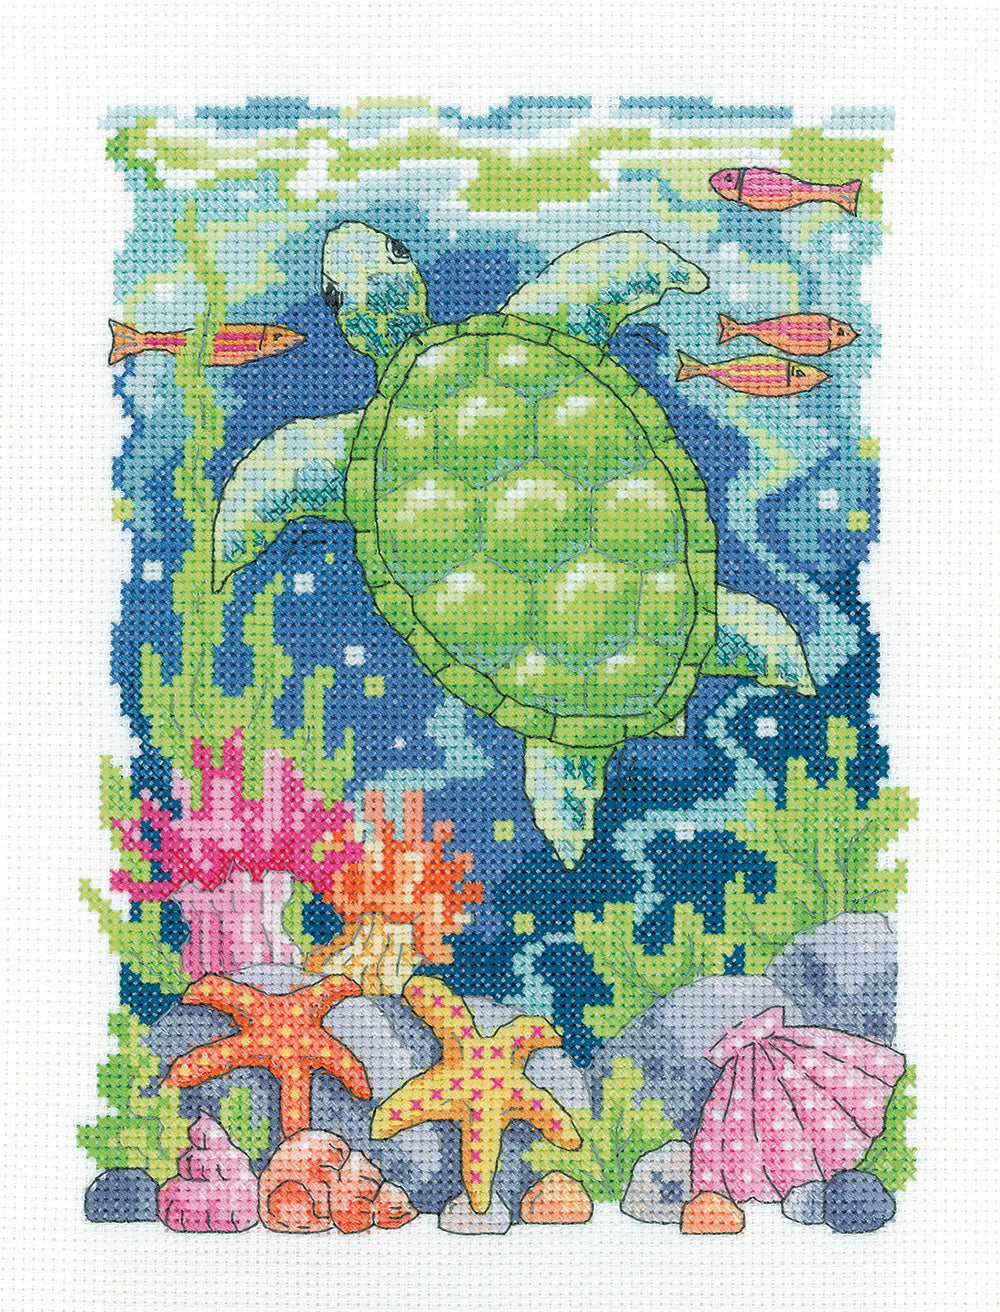 Turtle Cross Stitch Kit